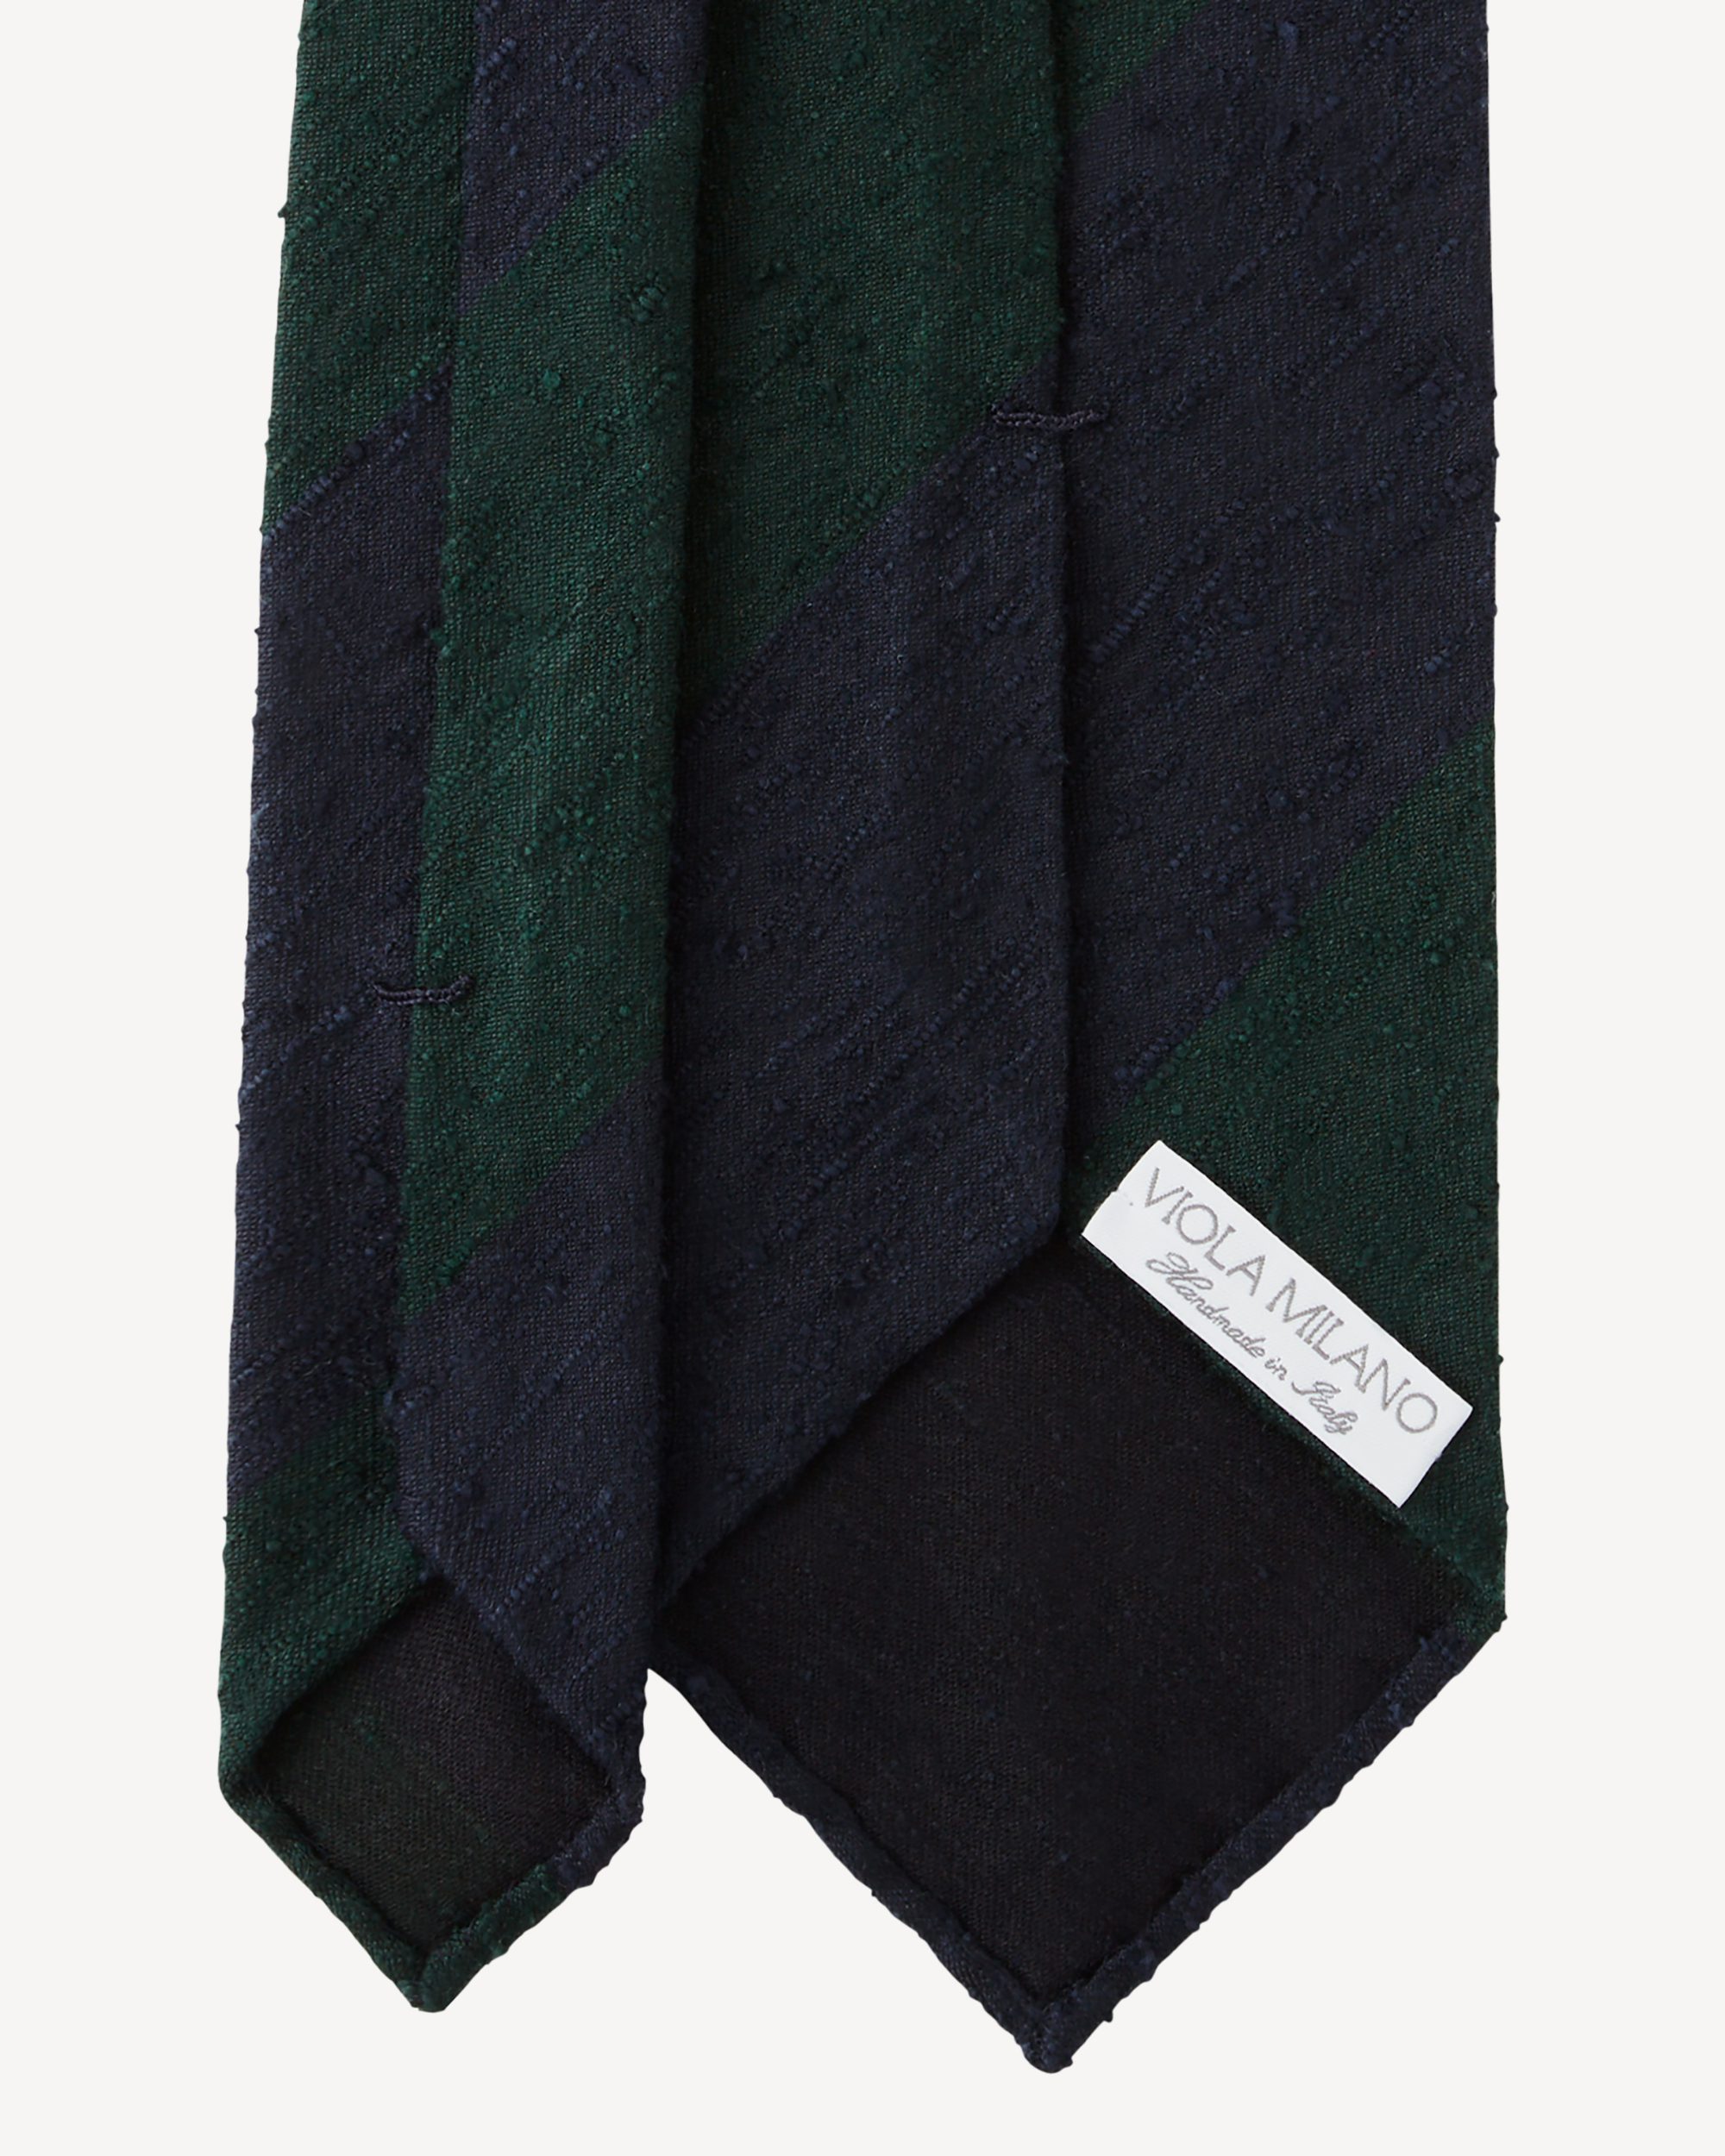 Block Stripe Handrolled Woven Shantung Tie - Navy/Forest | Viola Milano